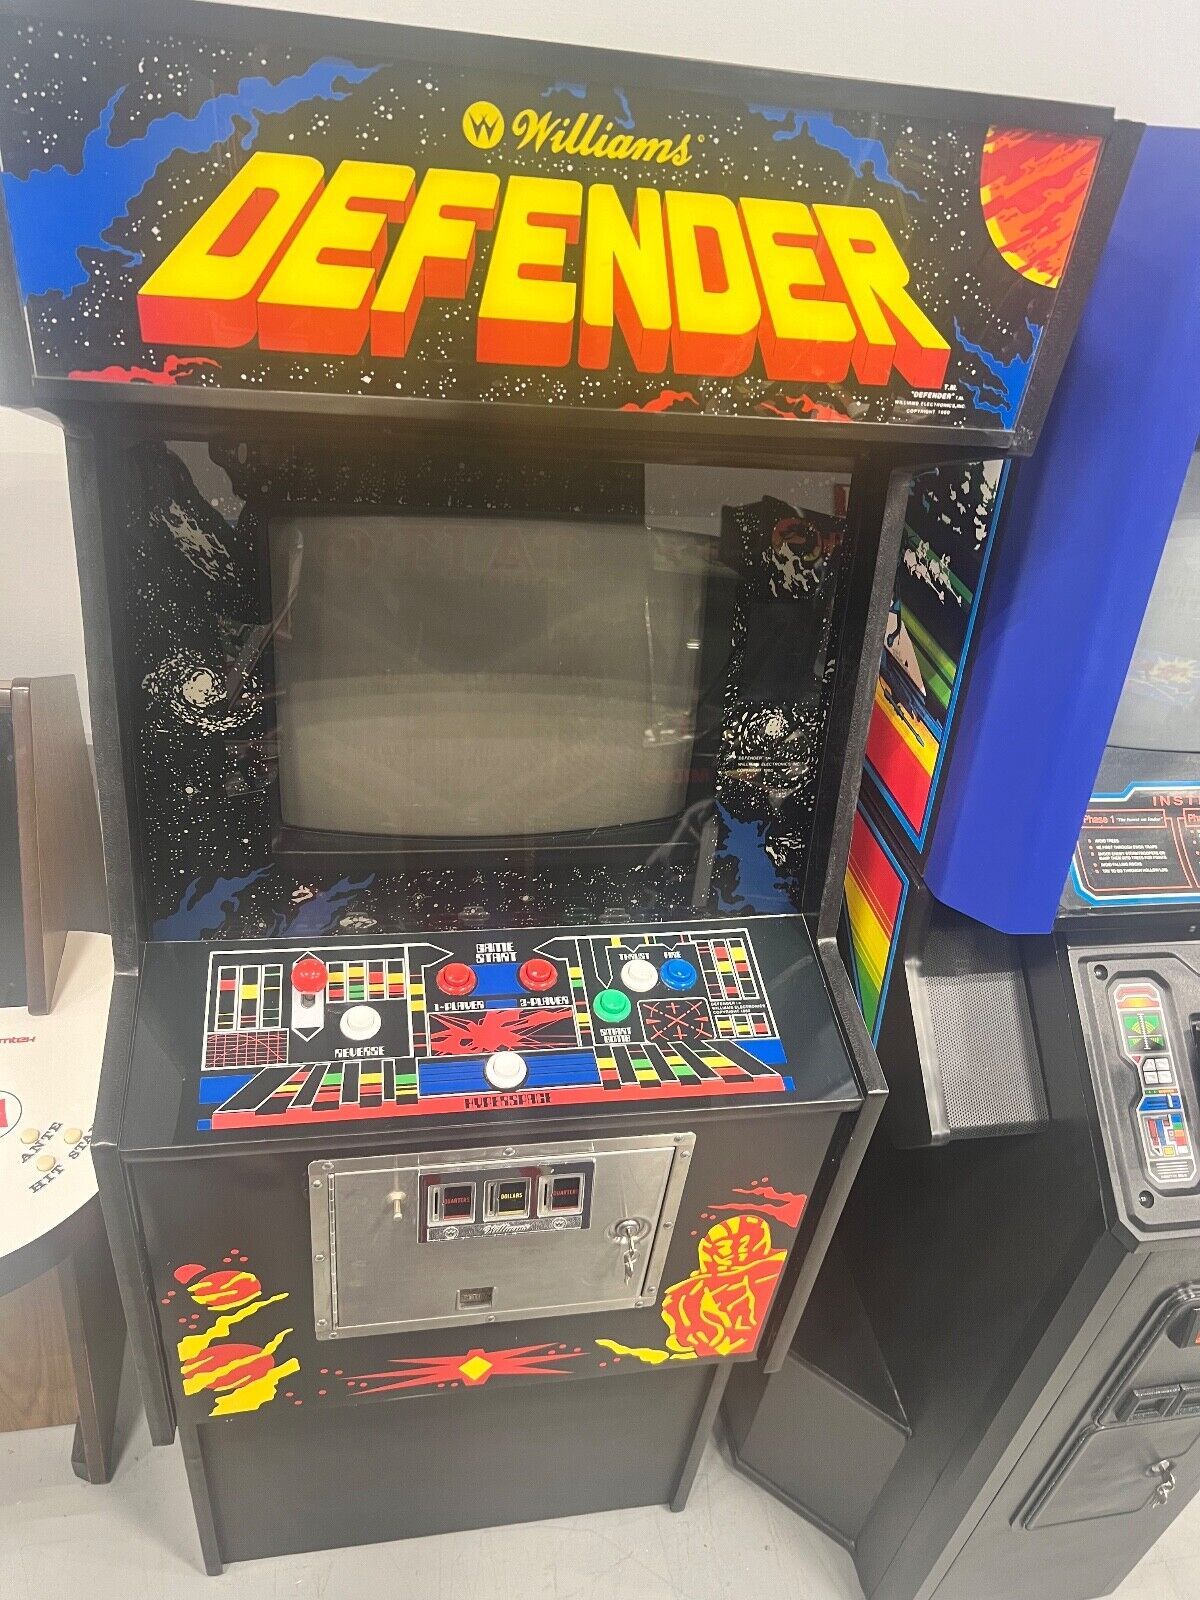 Beautiful Arcade Machine Original 1981 Williams Defender , Restored